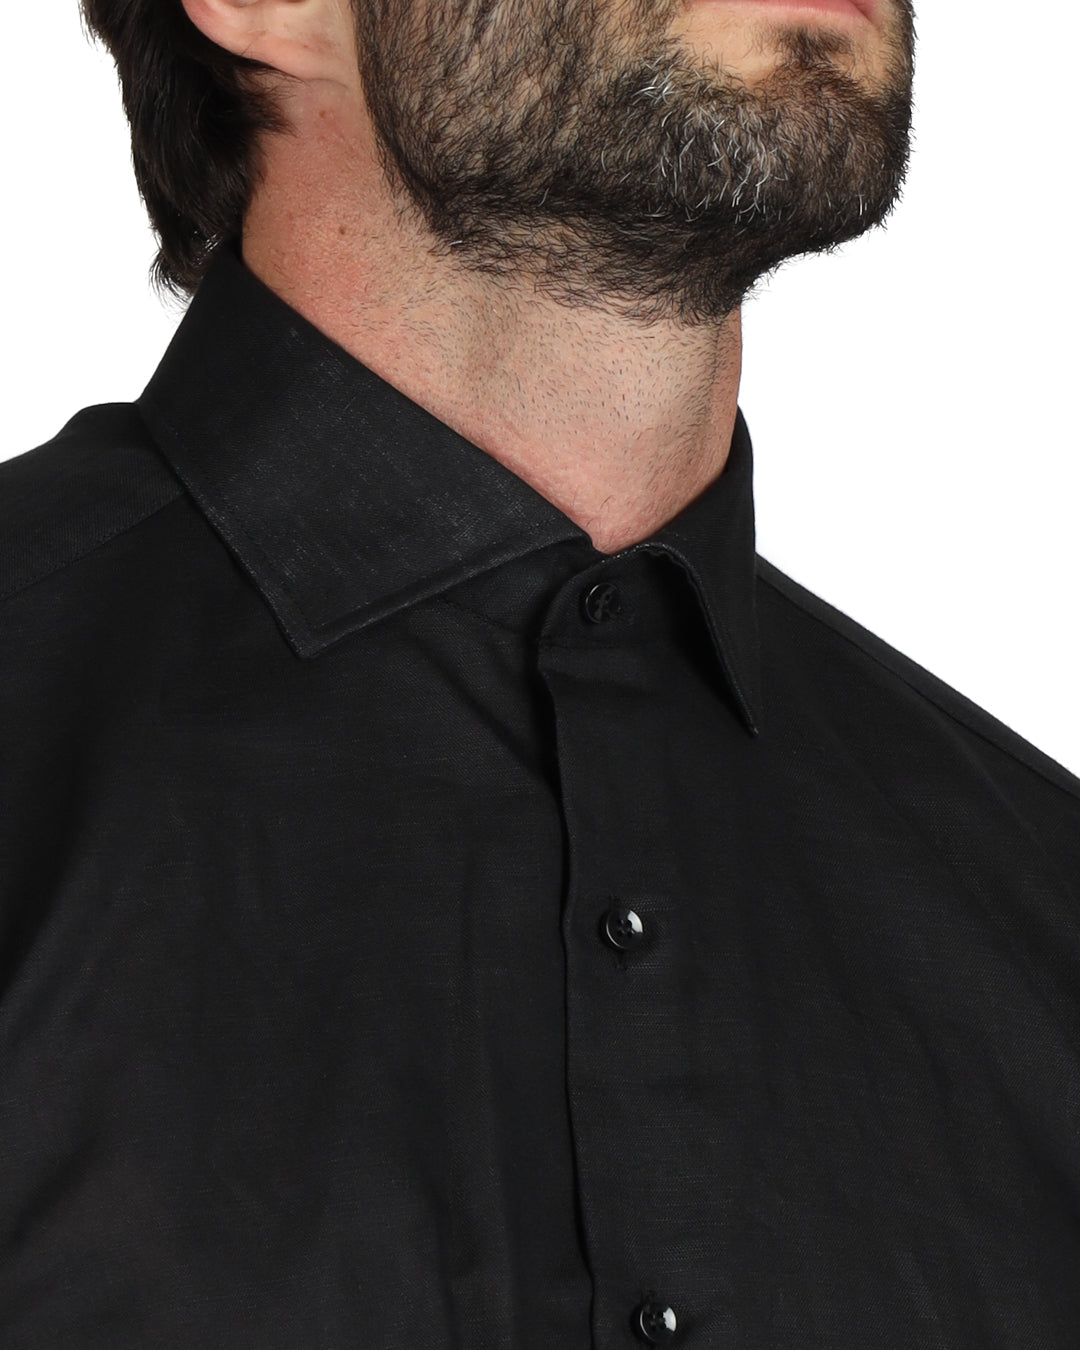 Praiano - Classic black linen shirt